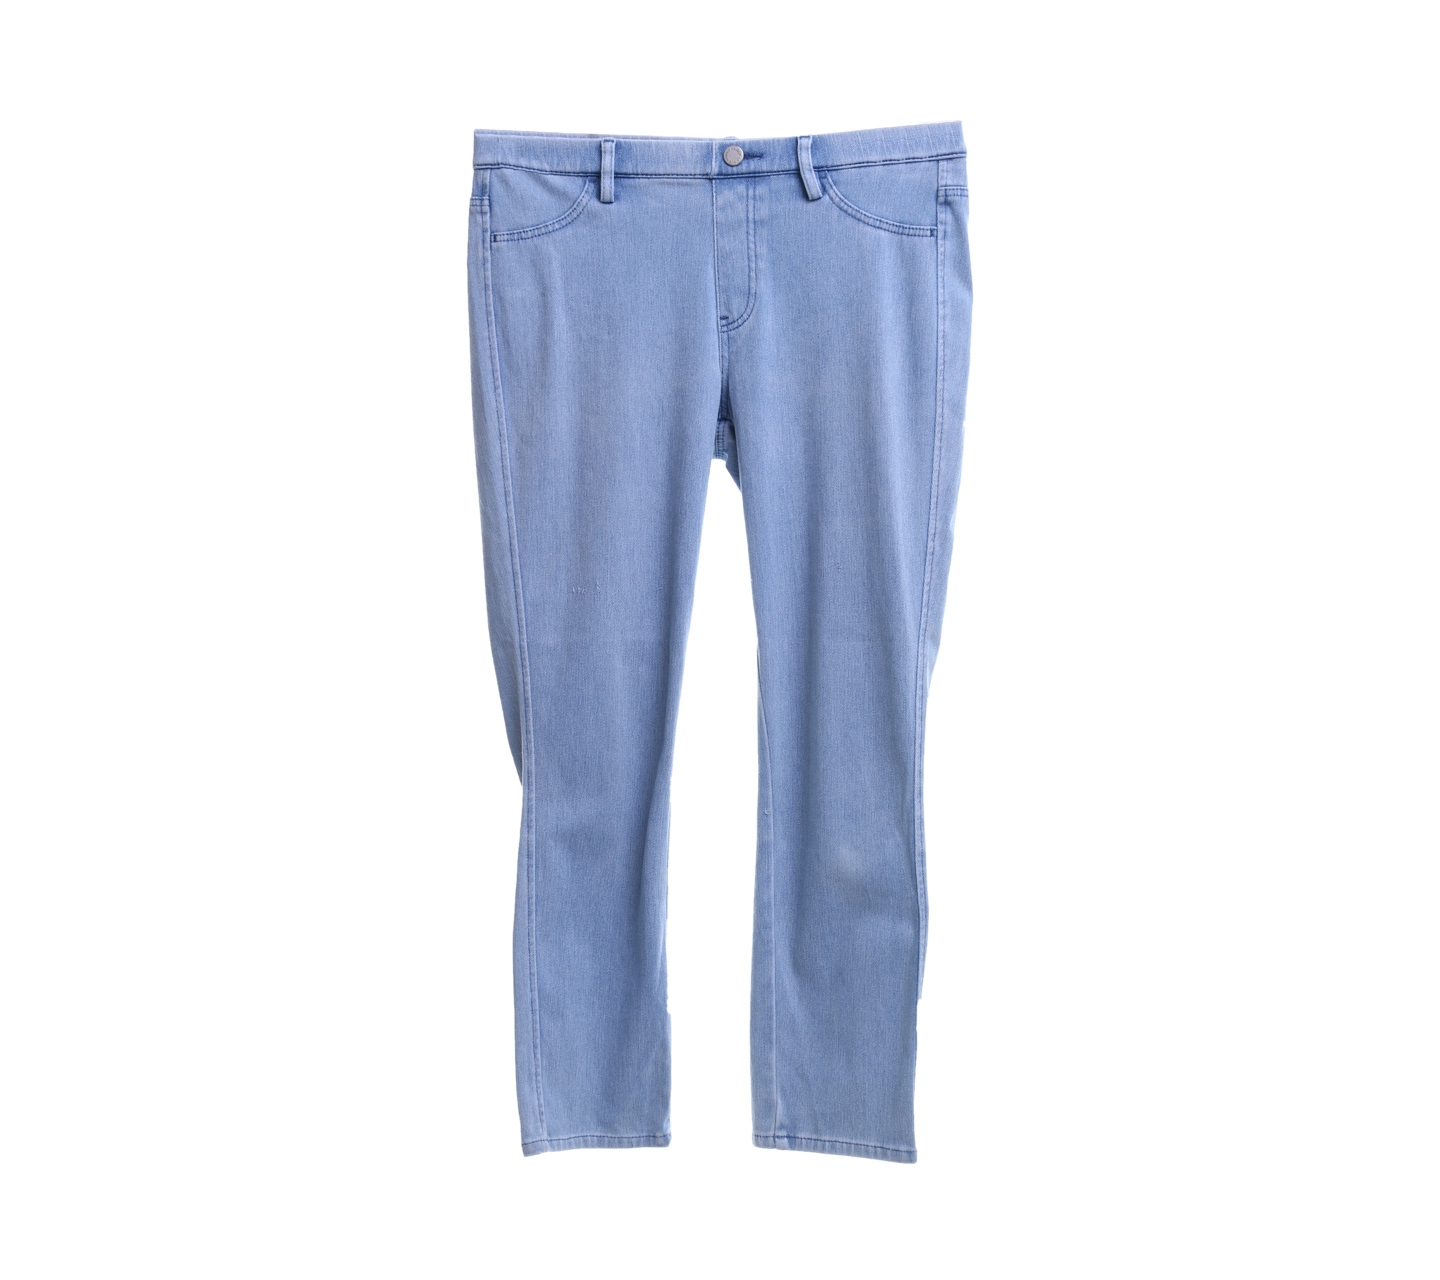 UNIQLO Light Blue Cropped Pants